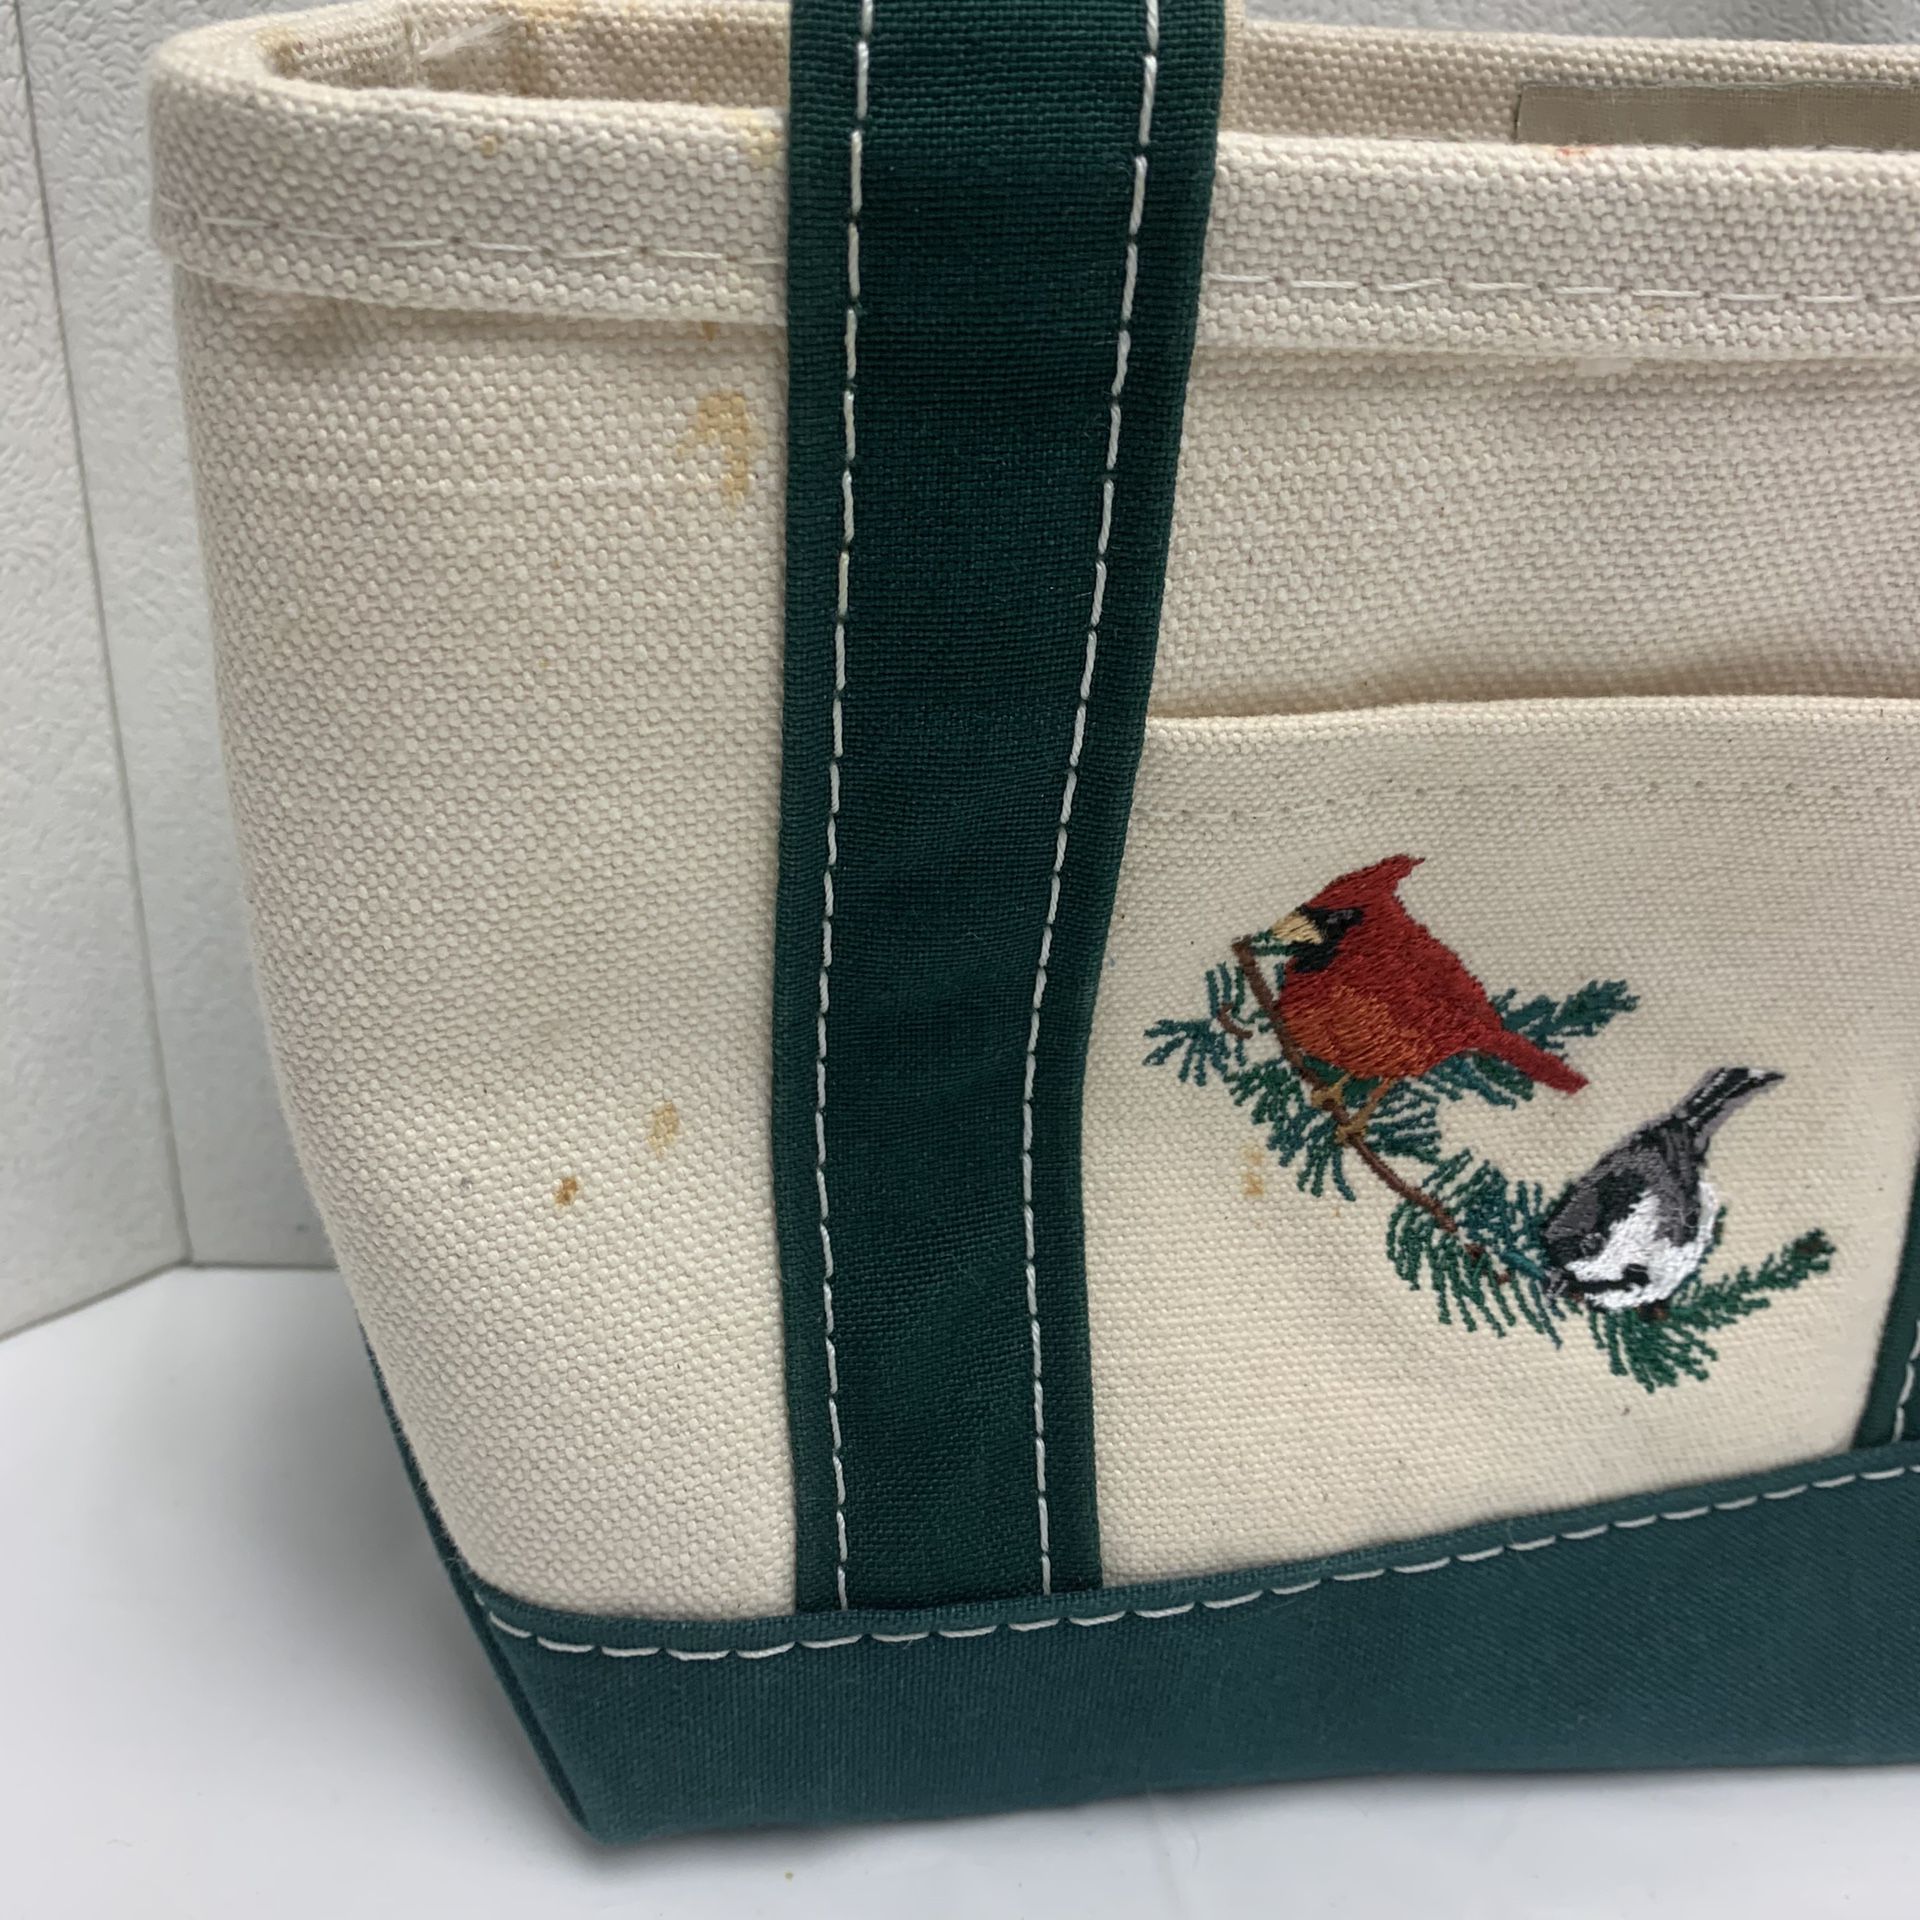 LL Bean Canvas Bag Boat & Tote Bag Small Green & Cream Embroidered Cardinal USA